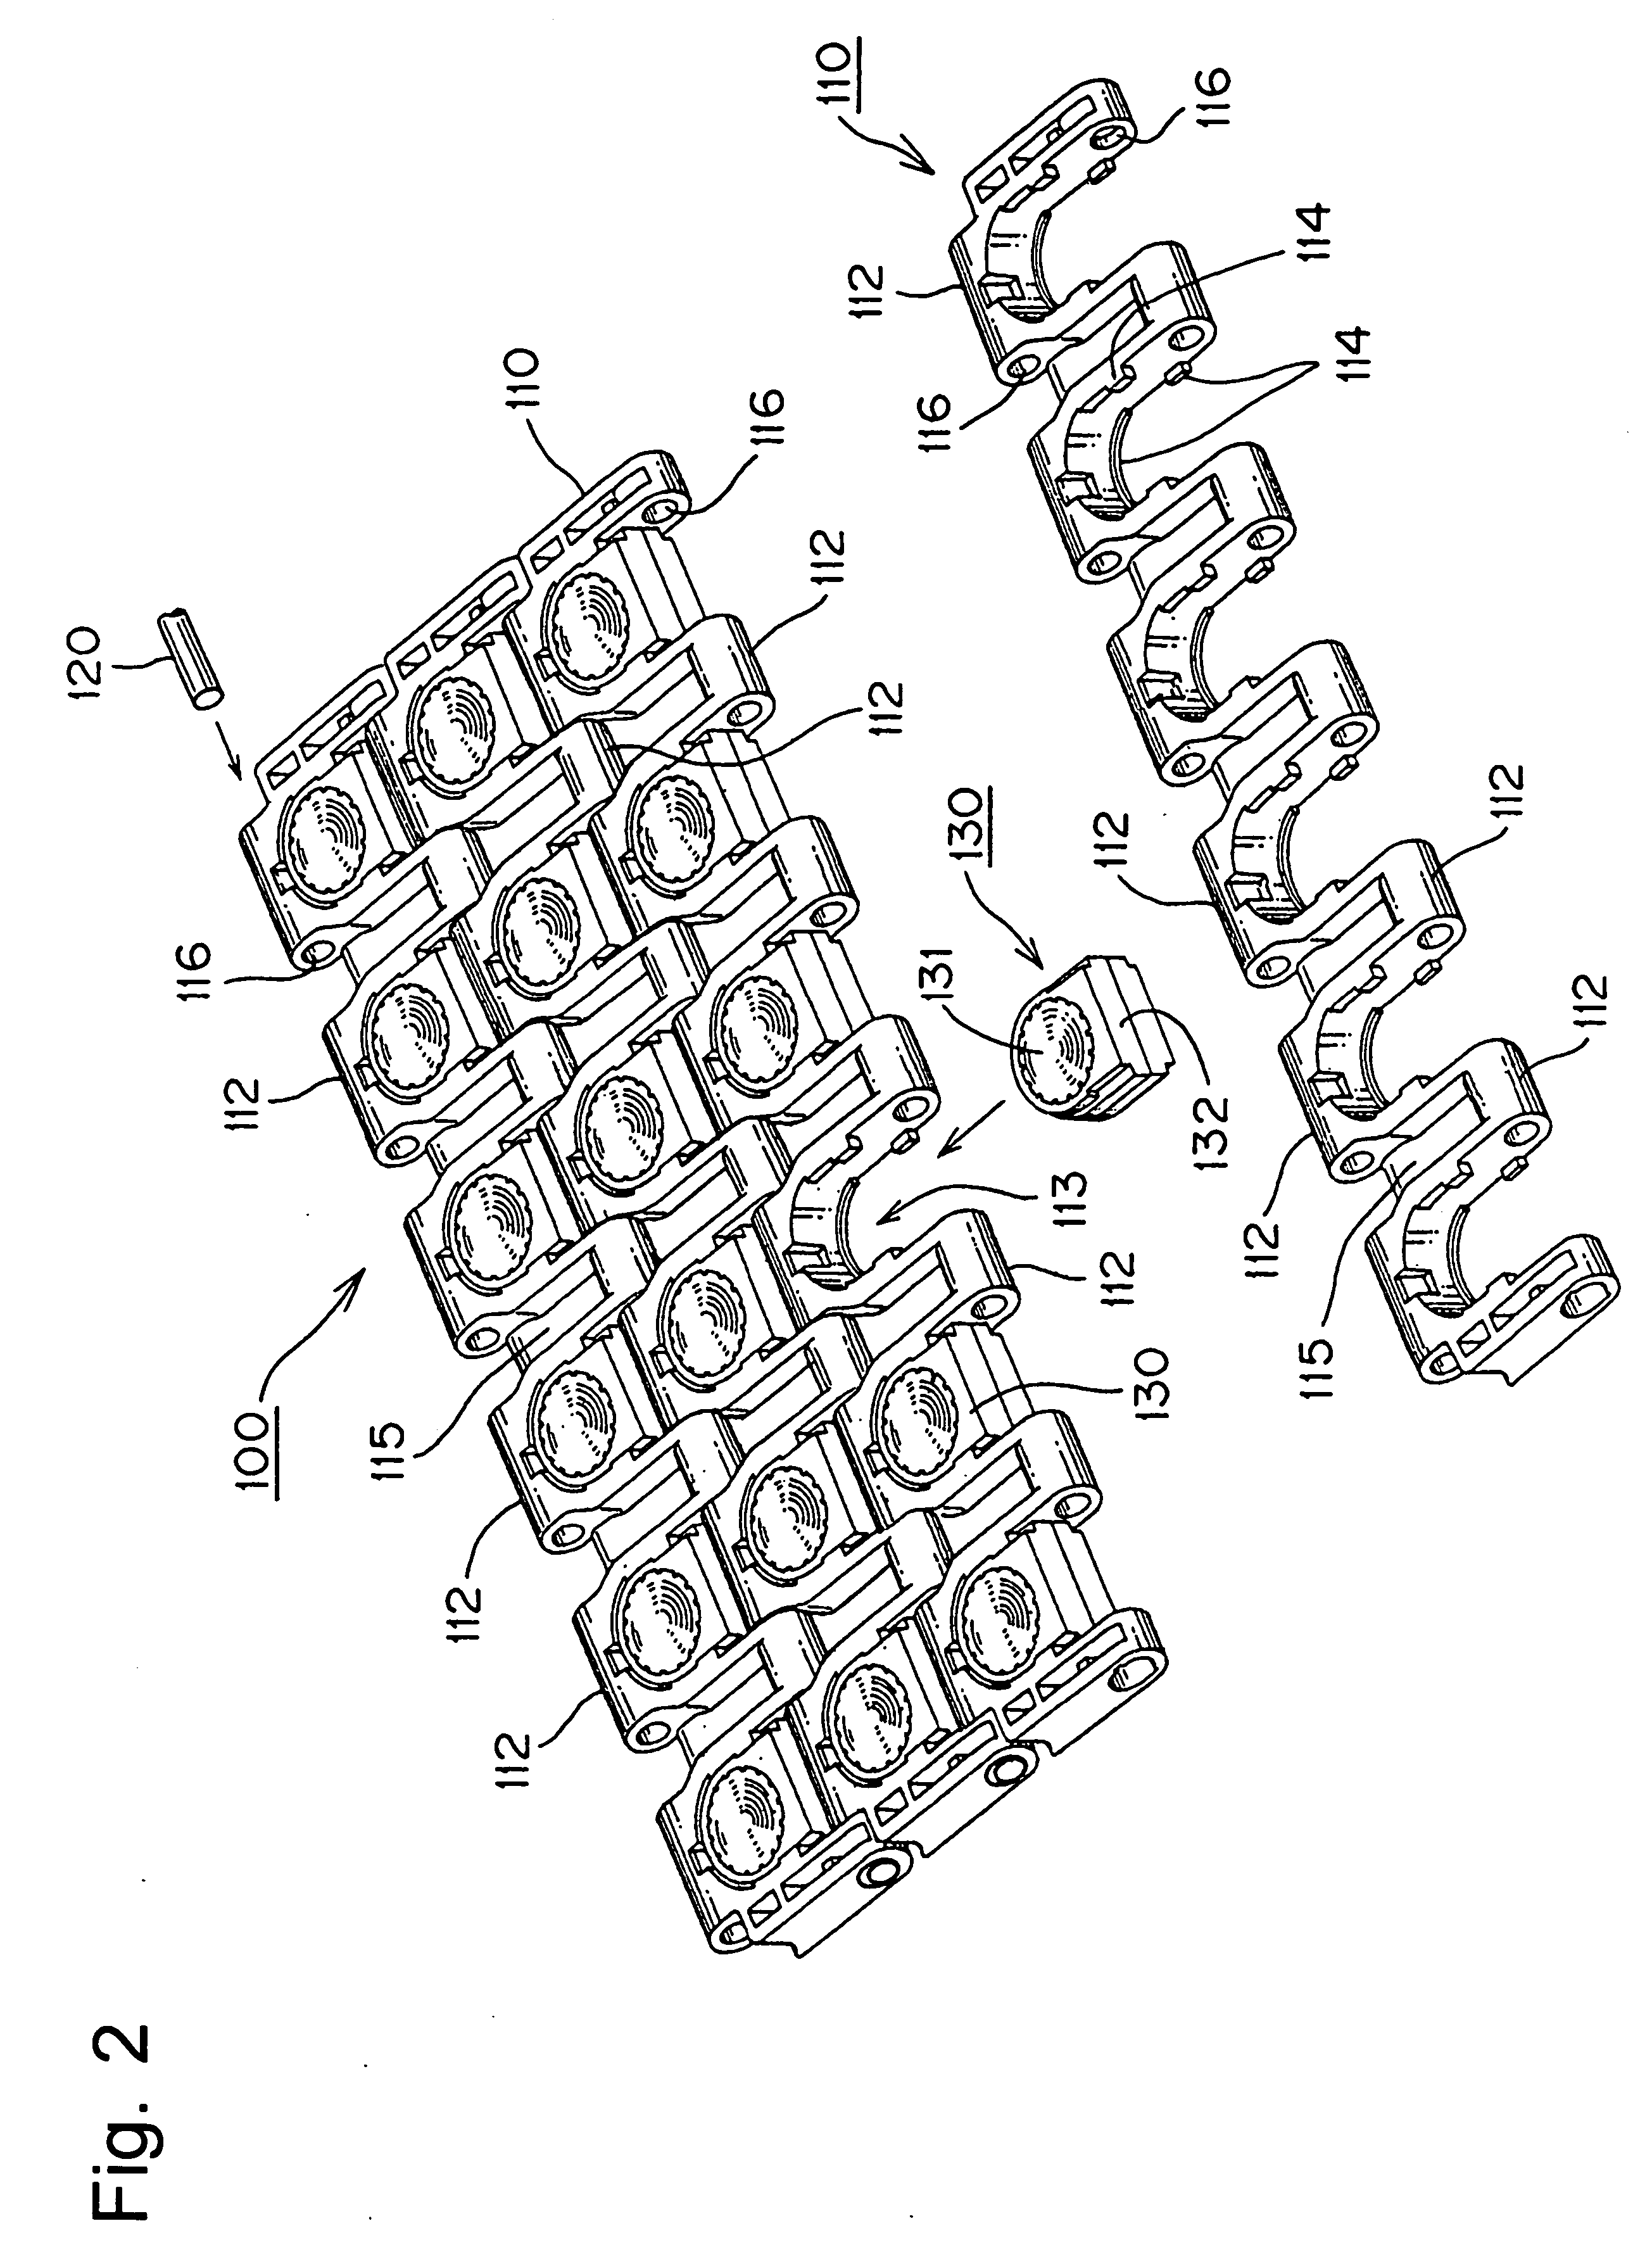 Conveyor chain